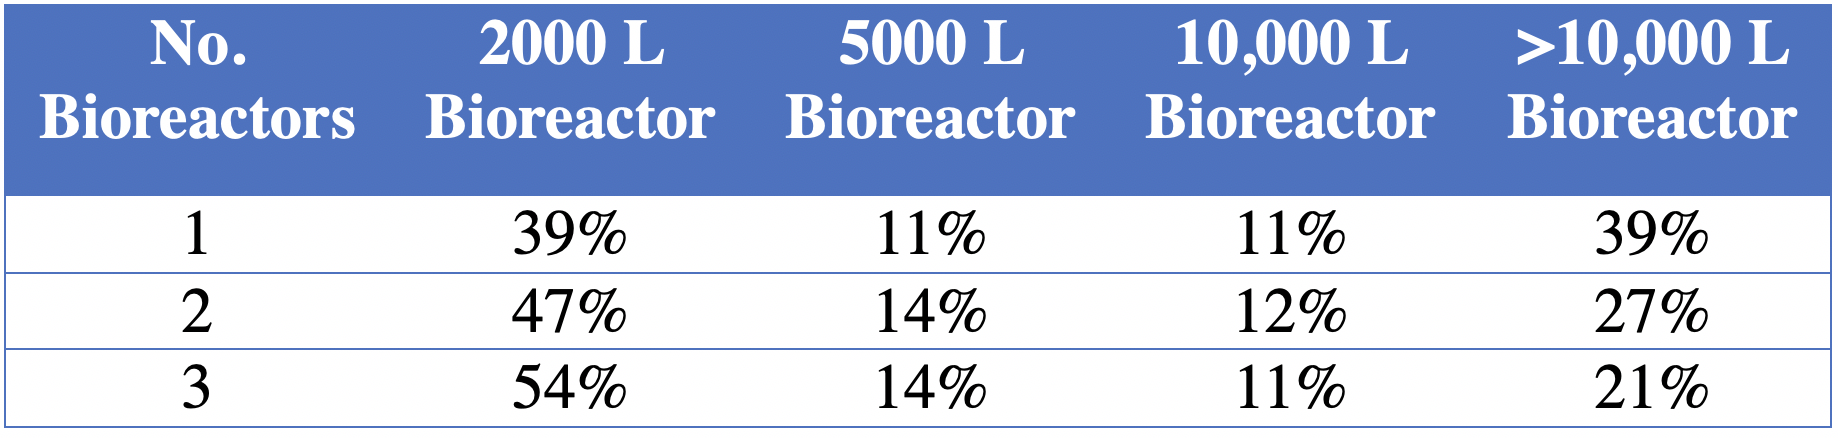 Table II: Percentage of product demand met by bioreactor scale